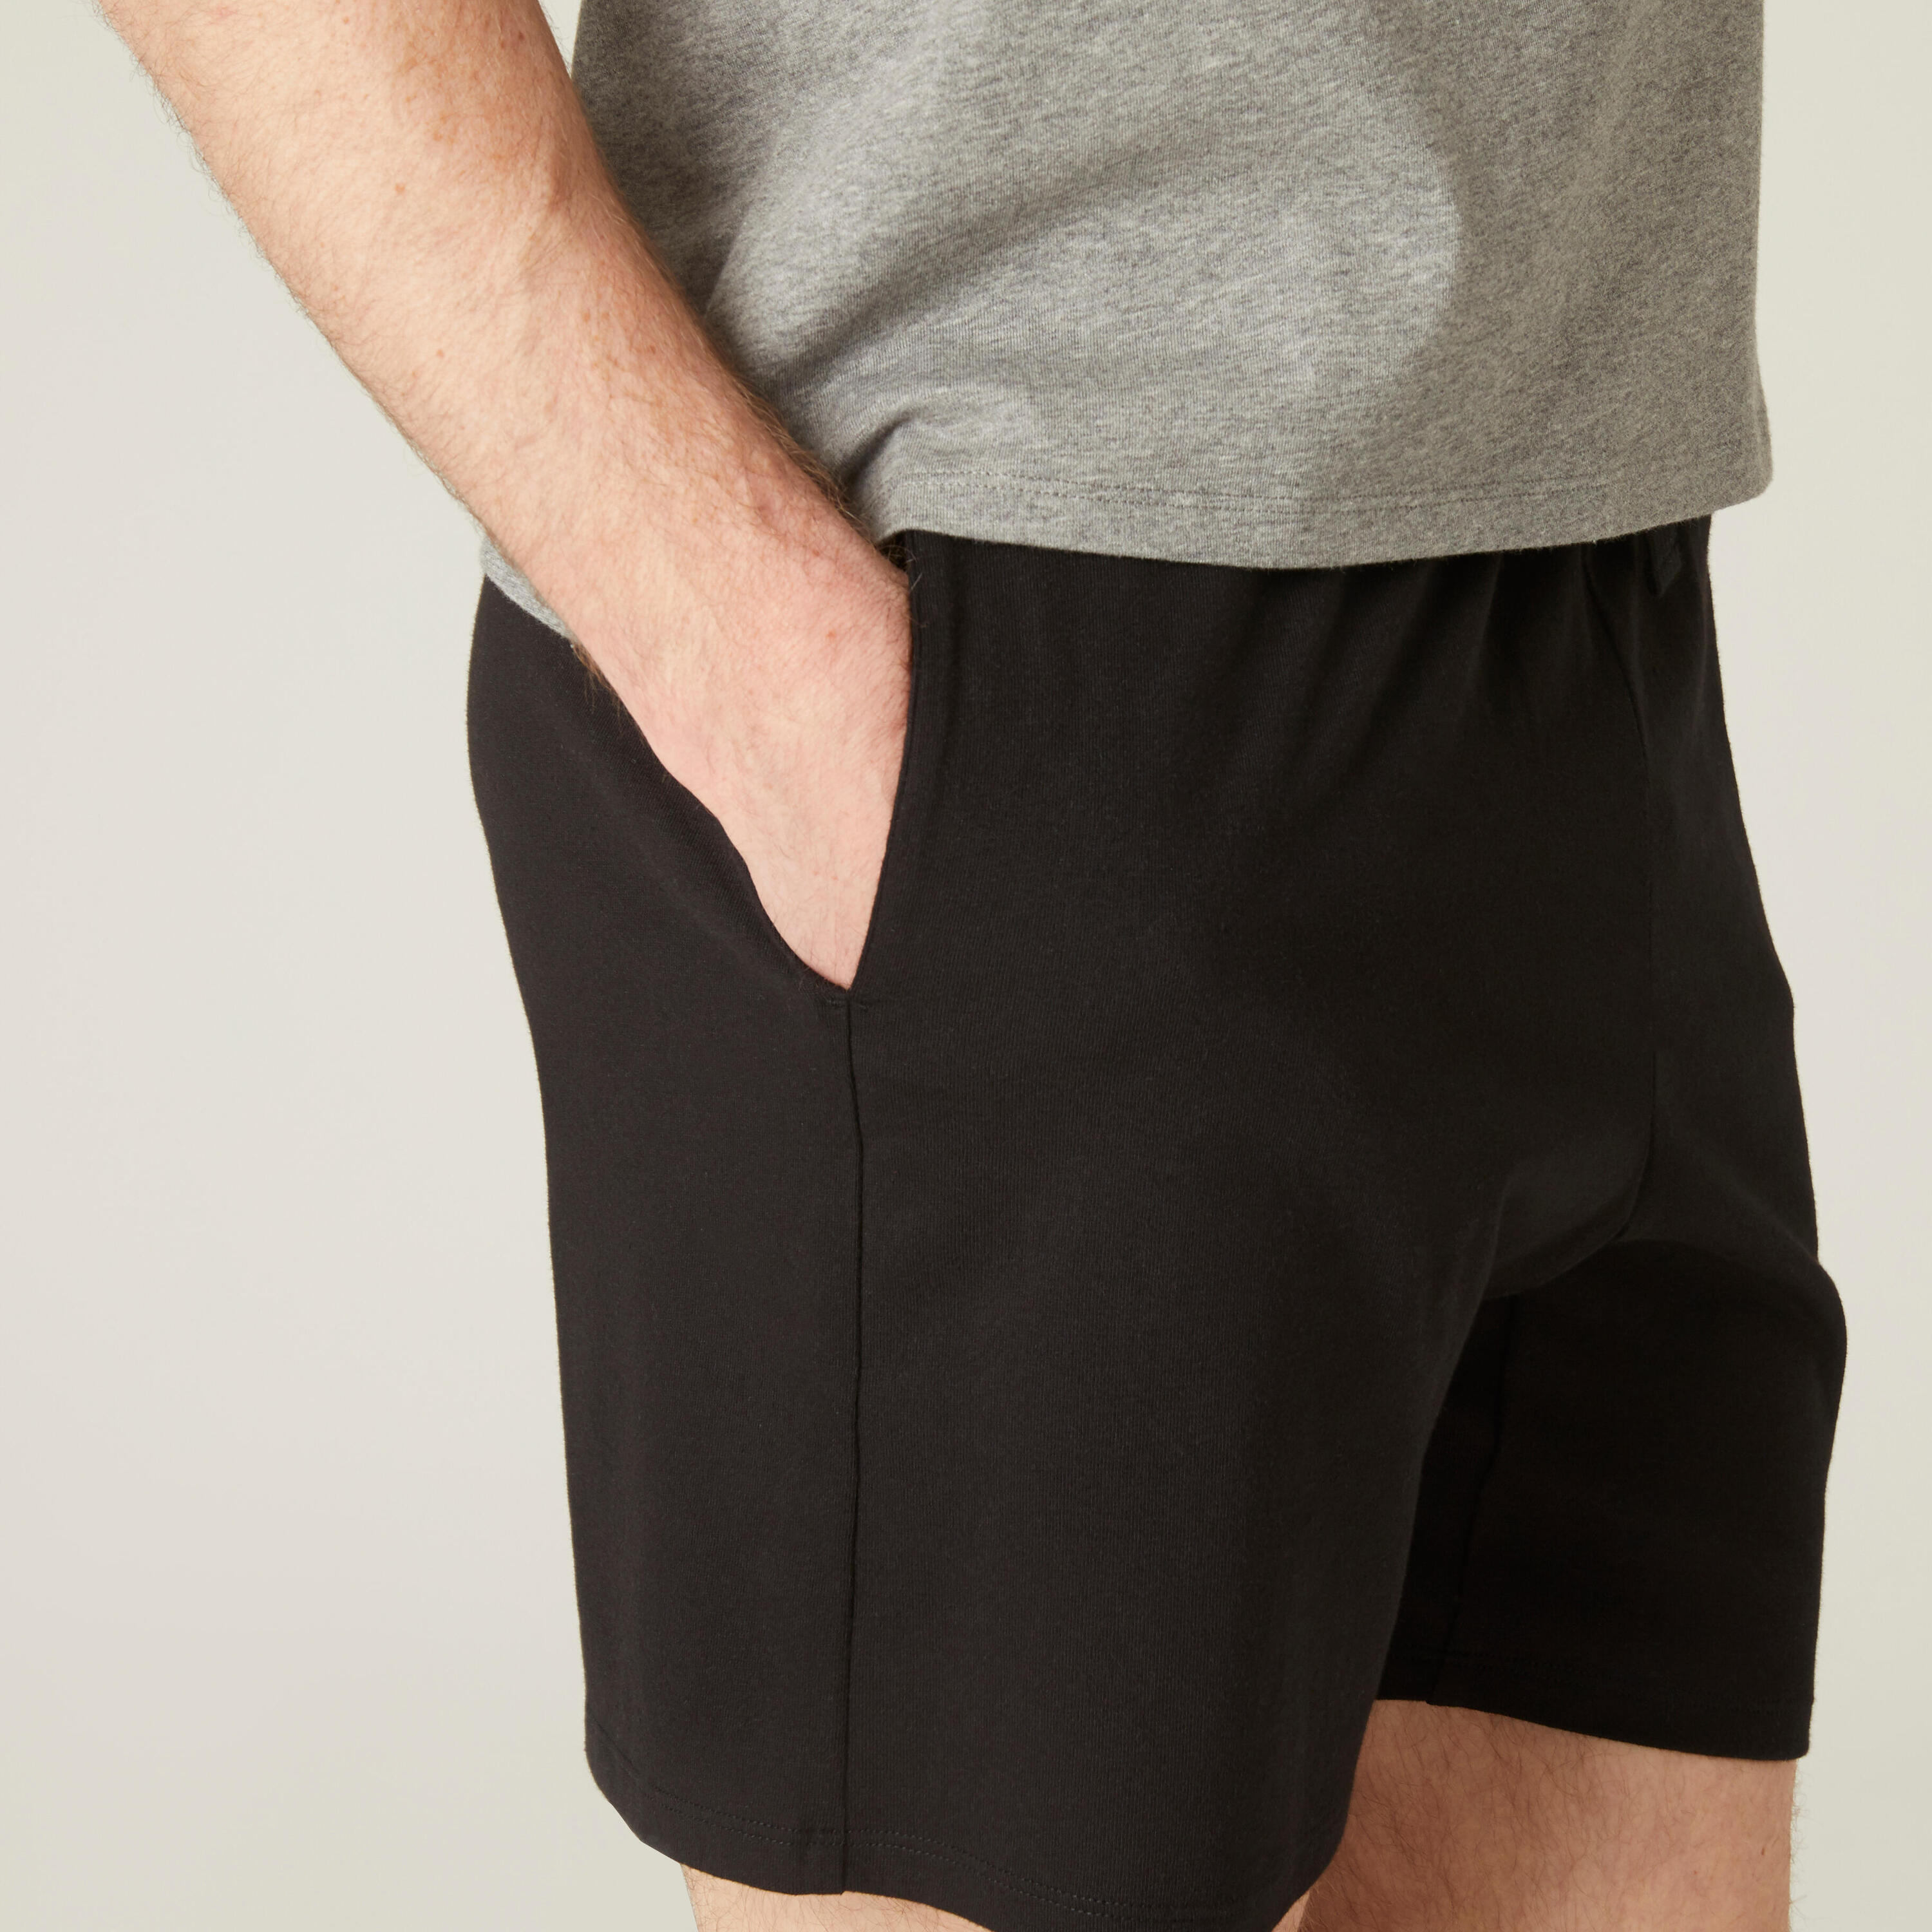 Men's Fitness Short Shorts 100 - Black 4/5